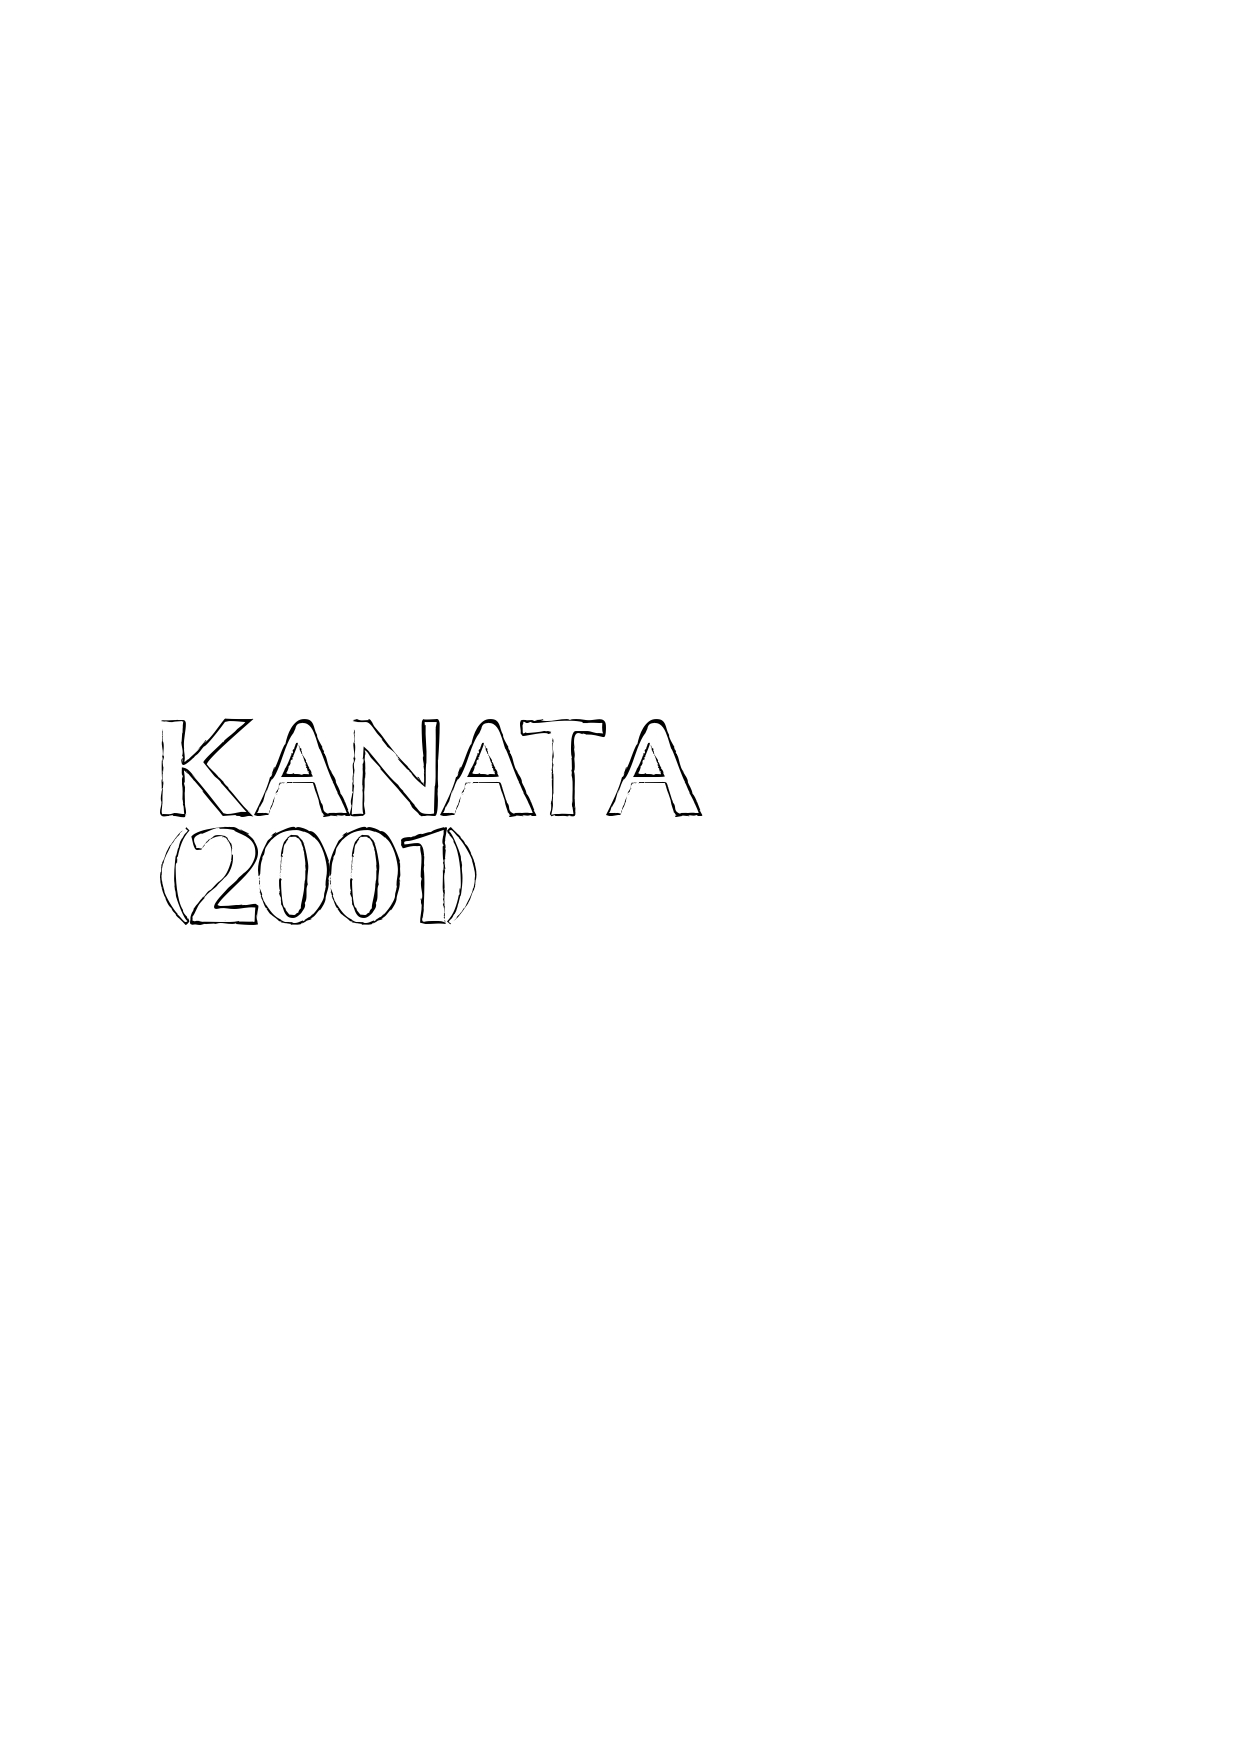 KANATA(2001)